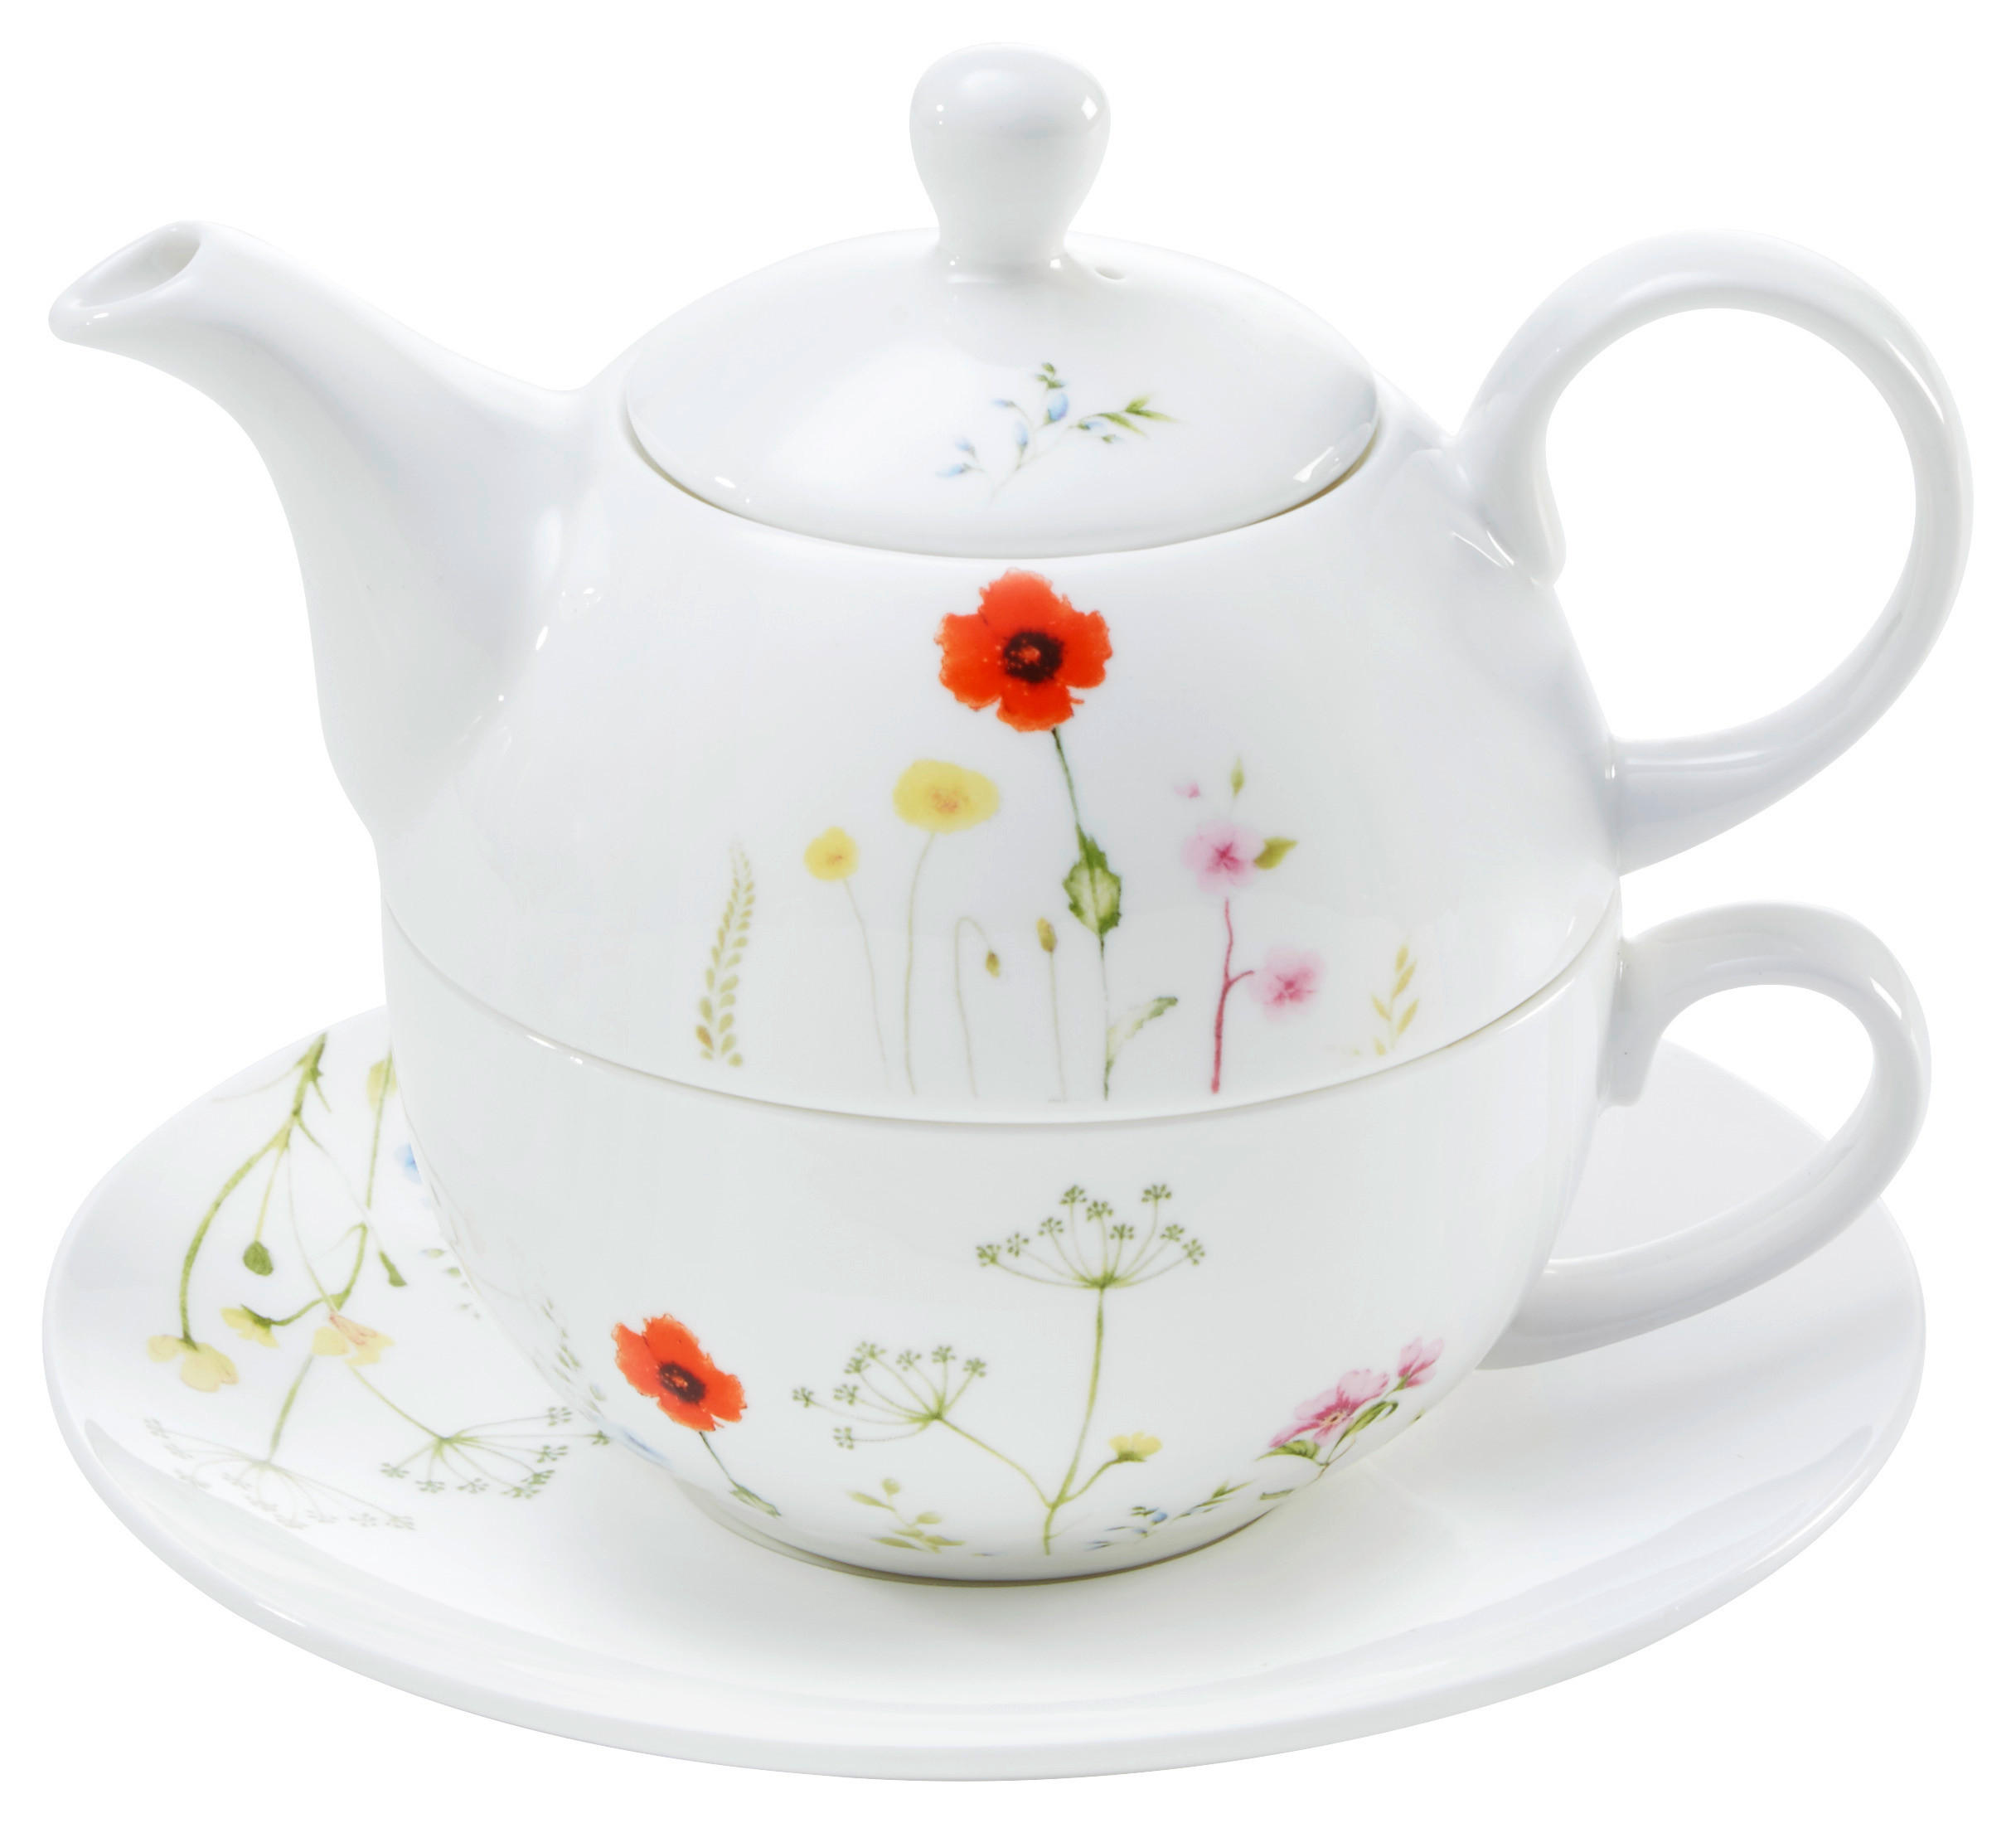 Ett tea-for-one set som består av en tekanna, ett fat och en tekopp. Setet har ett fint blomstermönster